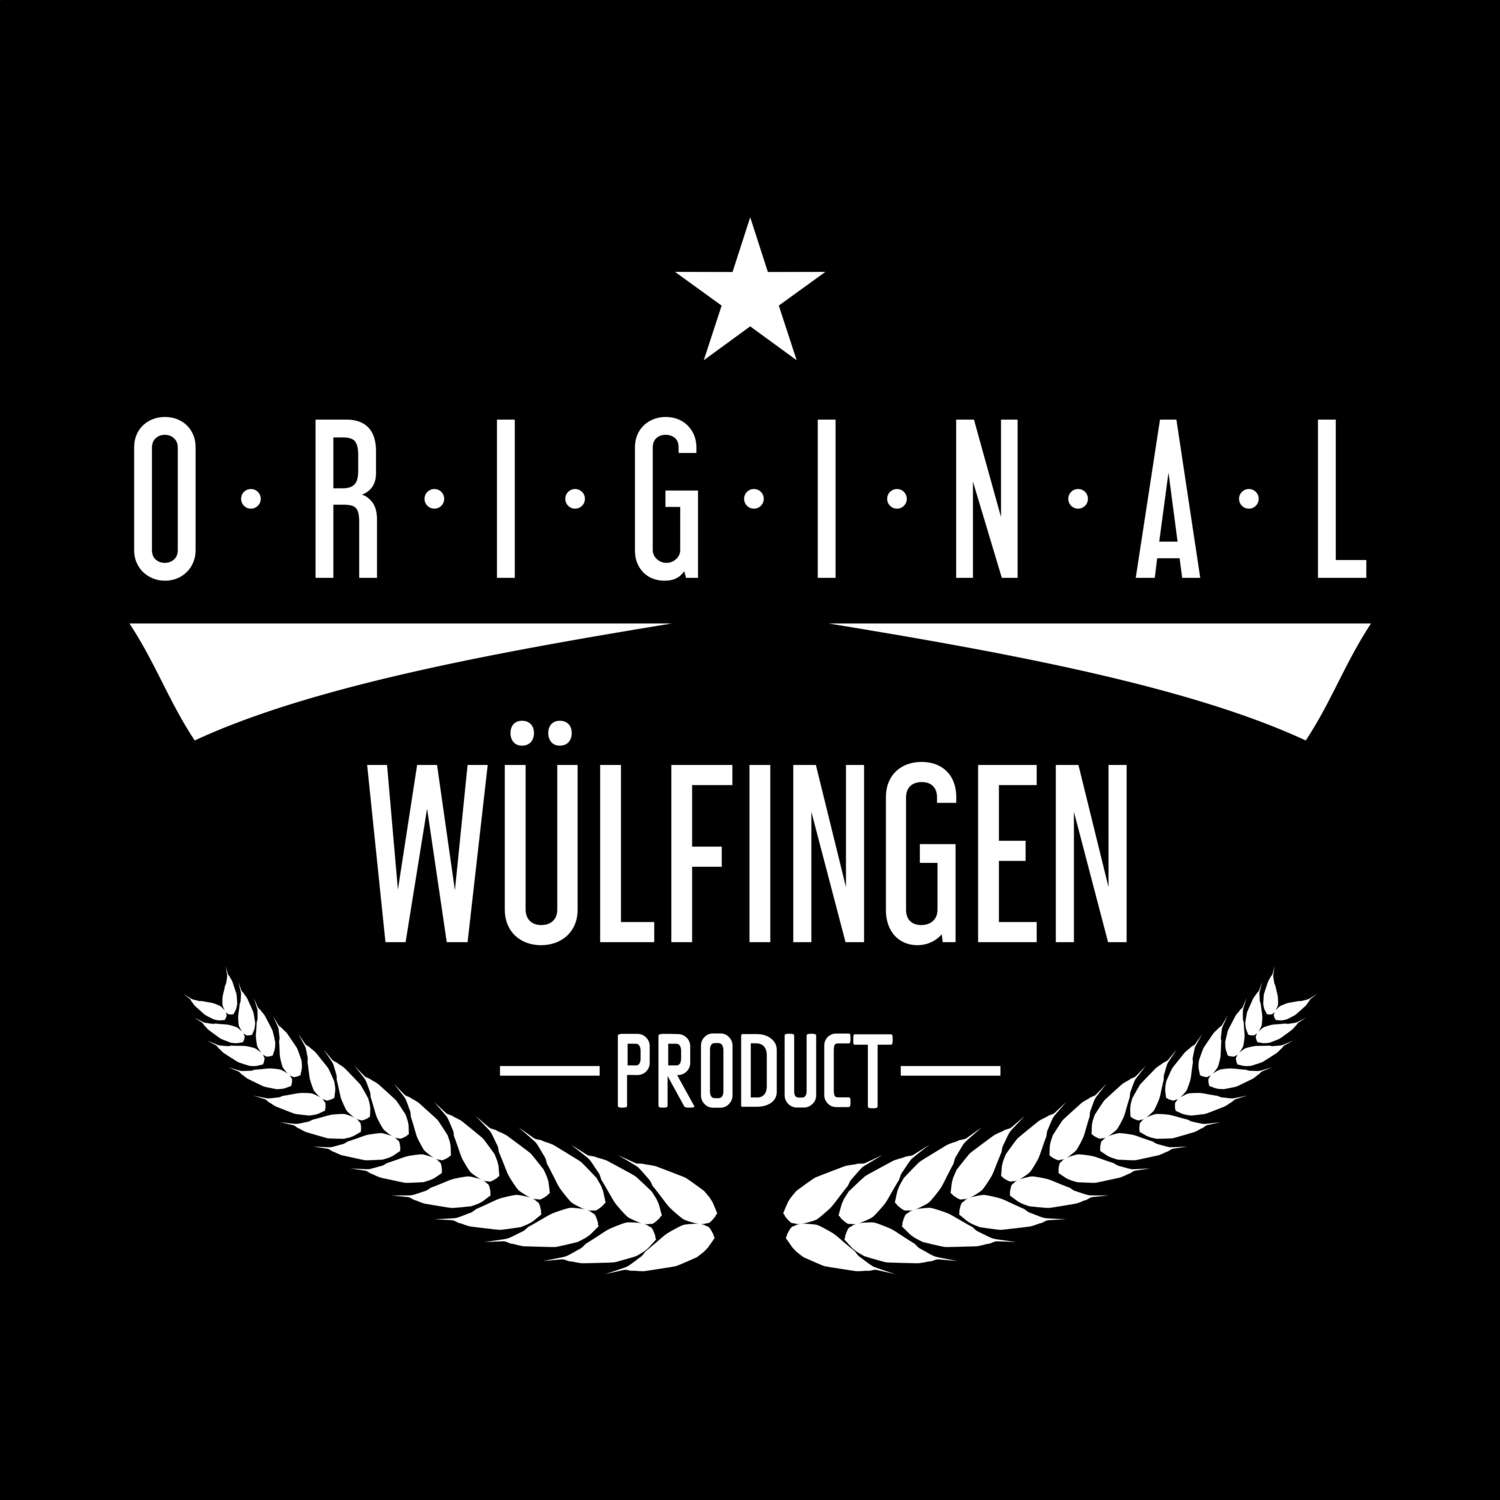 Wülfingen T-Shirt »Original Product«